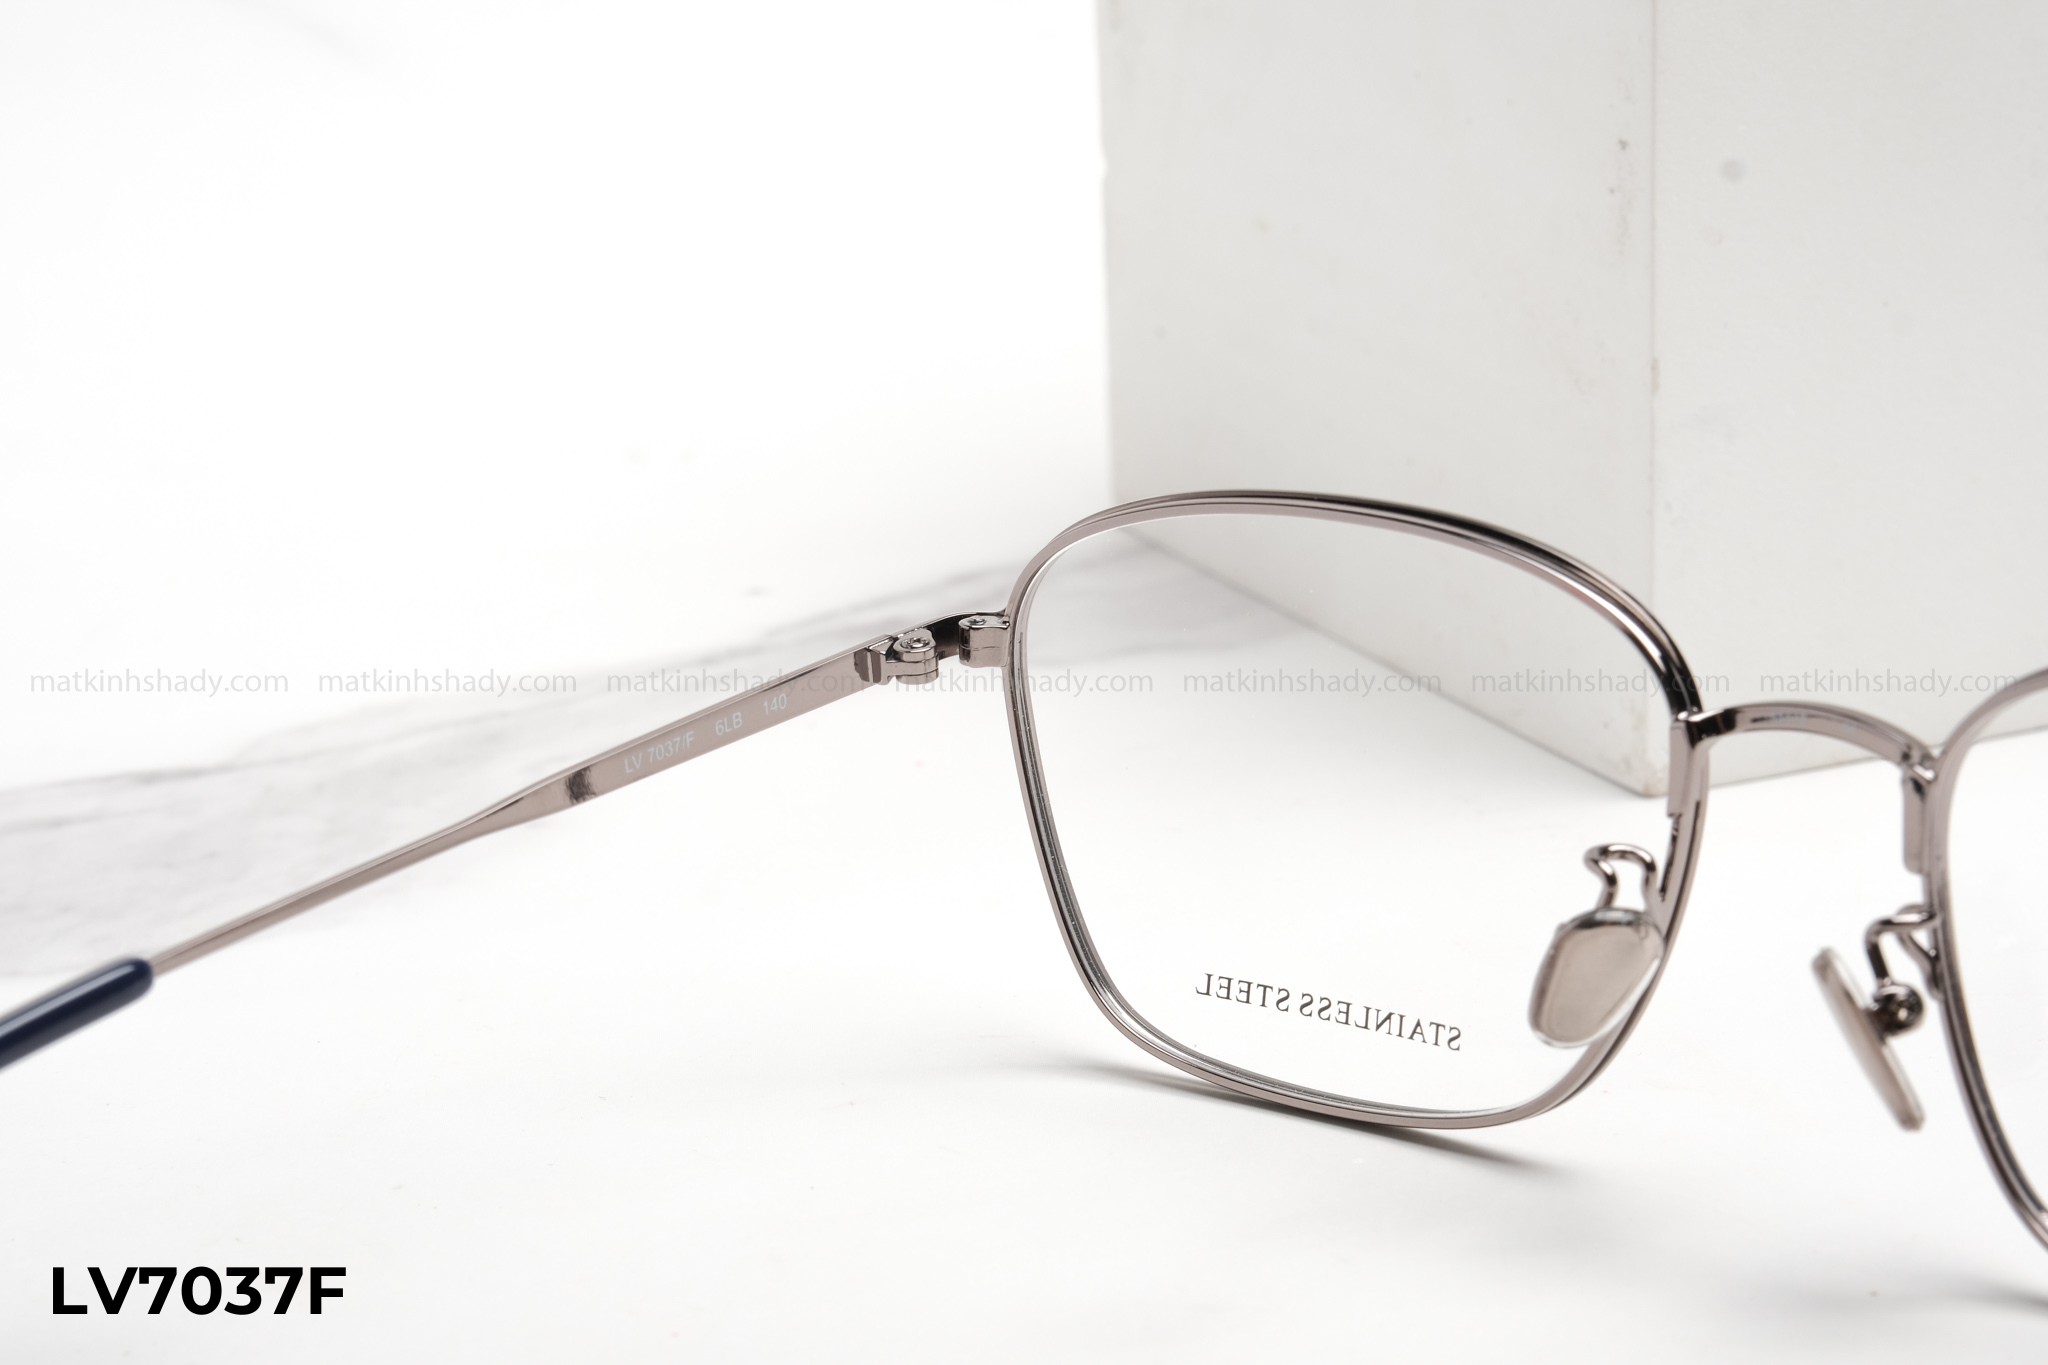  Levi's Eyewear - Glasses - LV7037F 